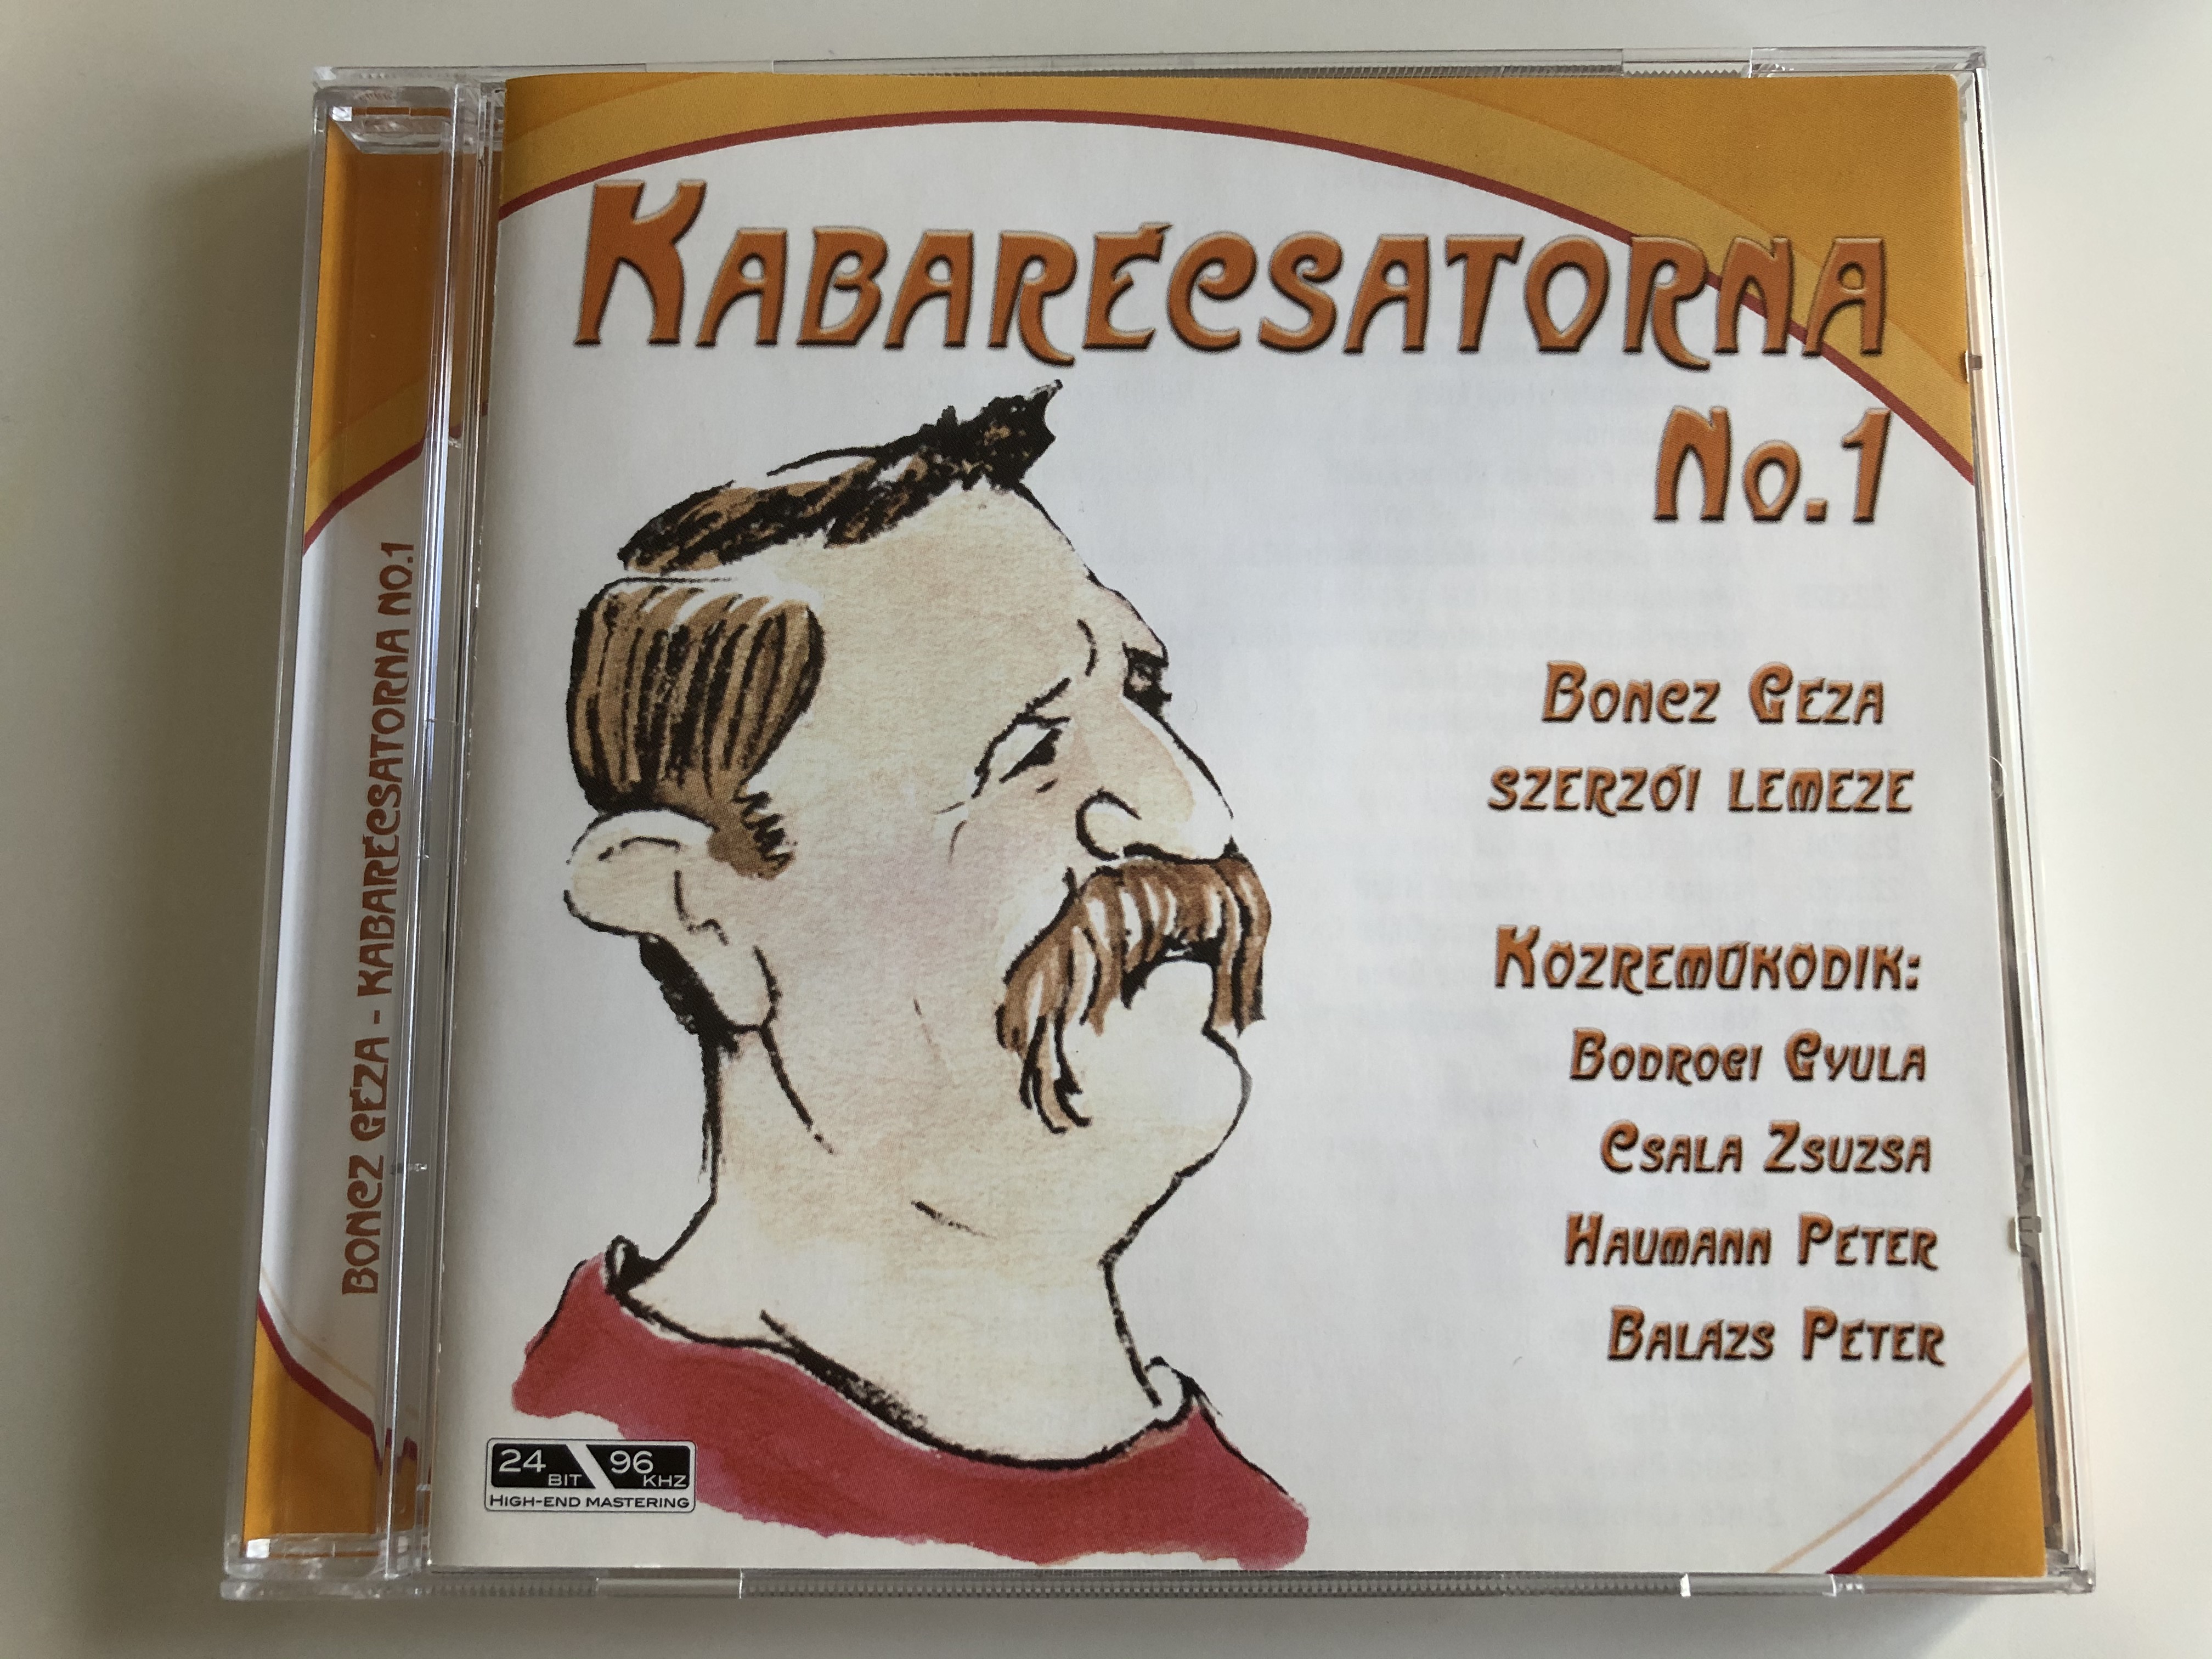 kabar-csatorna-no.-1-bones-geza-szerzoi-lemeze-kozremukodik-bodrogi-gyula-csala-zsuzsa-haumann-peter-balazs-peter-membran-music-audio-cd-2005-223-332-1-.jpg